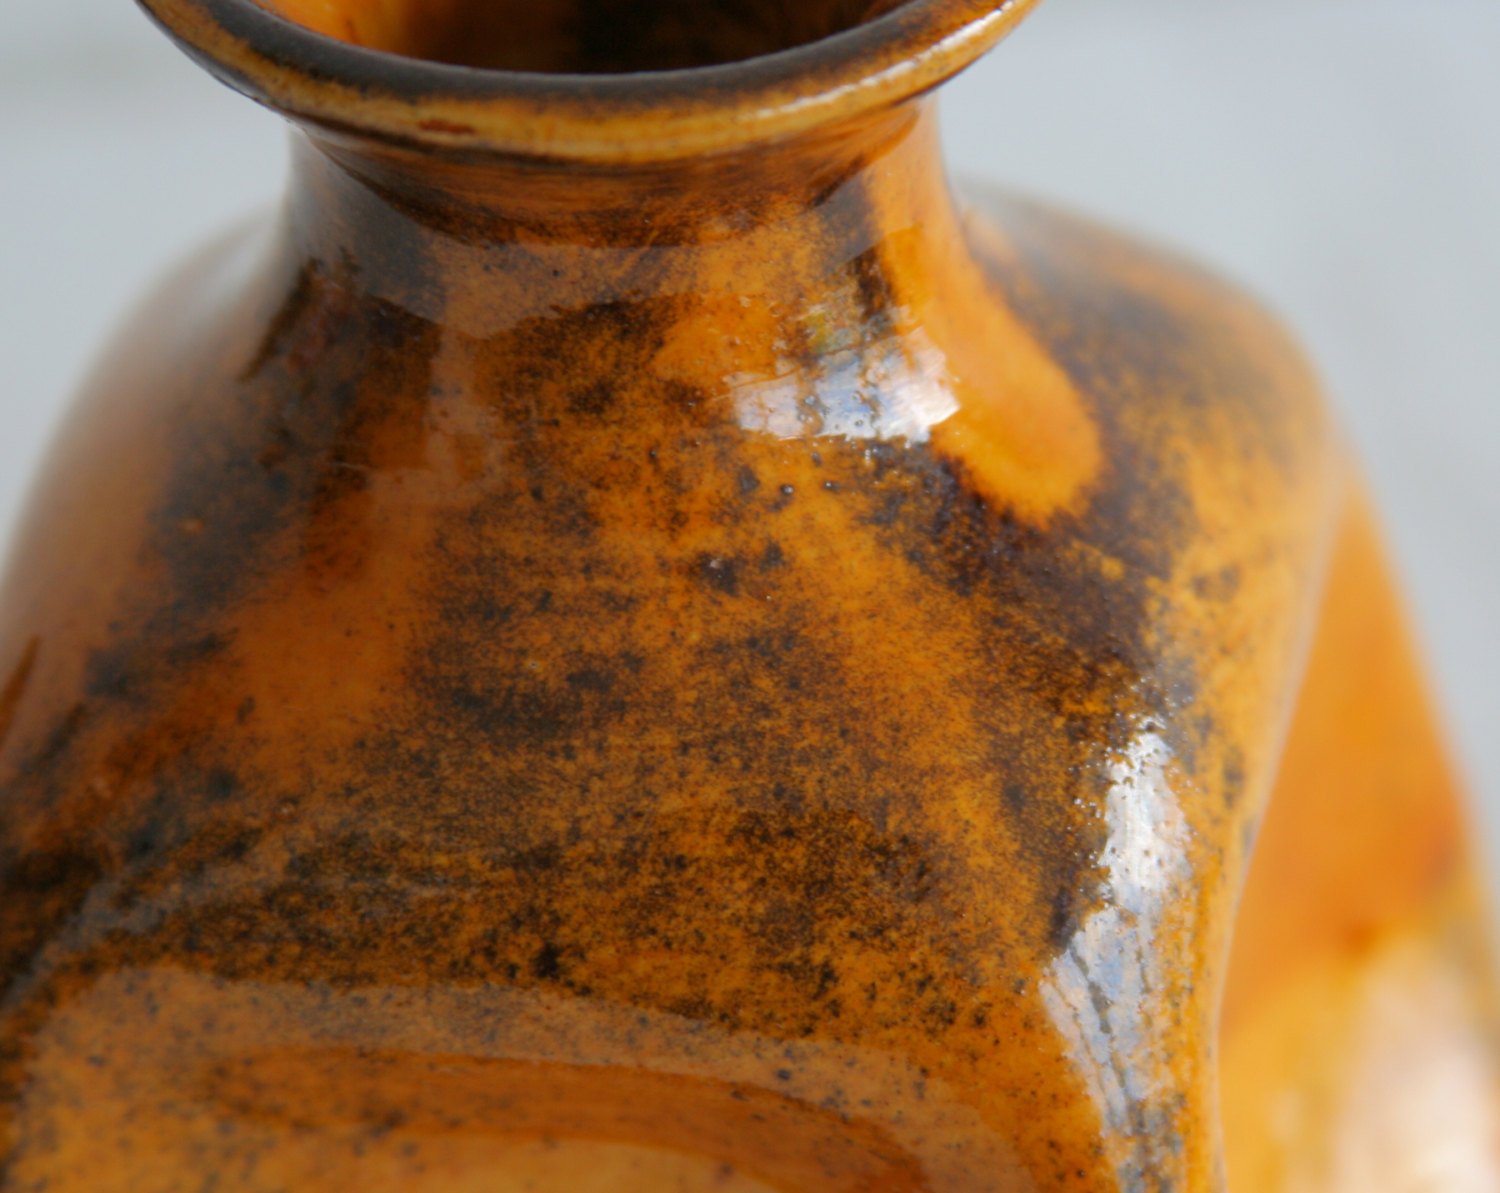 PRÆSTØ Yellow & Black Glazed Ceramic Bottle Vase Mollaris.com 